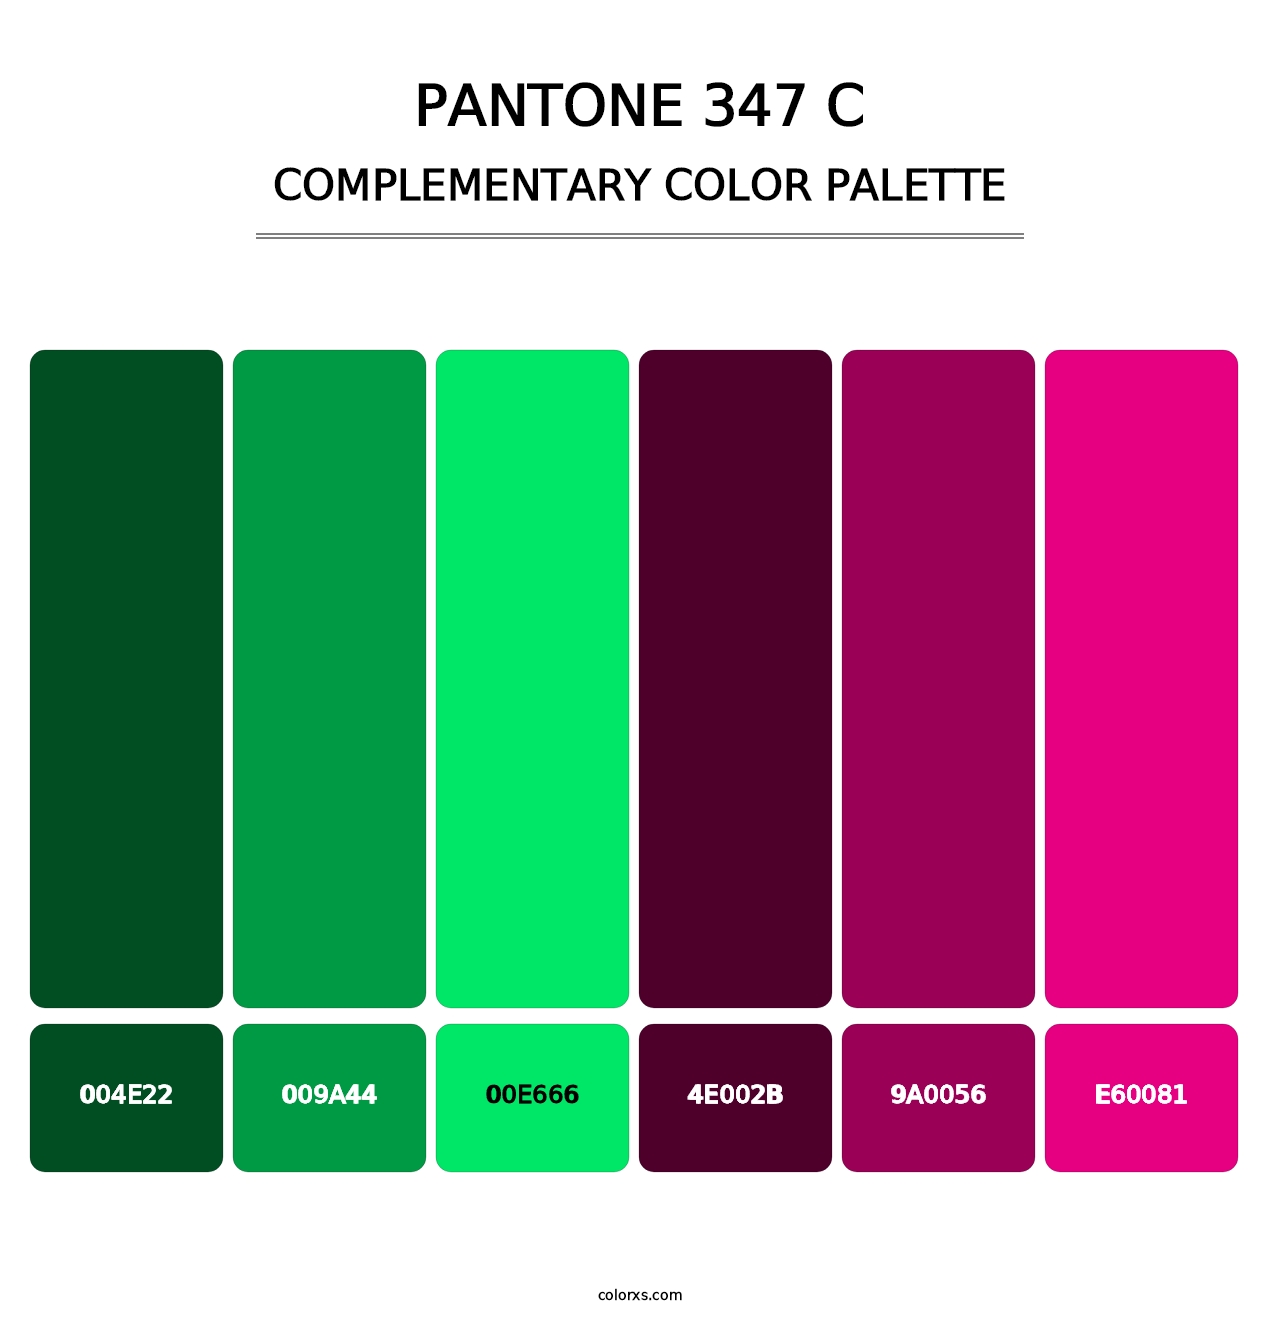 PANTONE 347 C - Complementary Color Palette